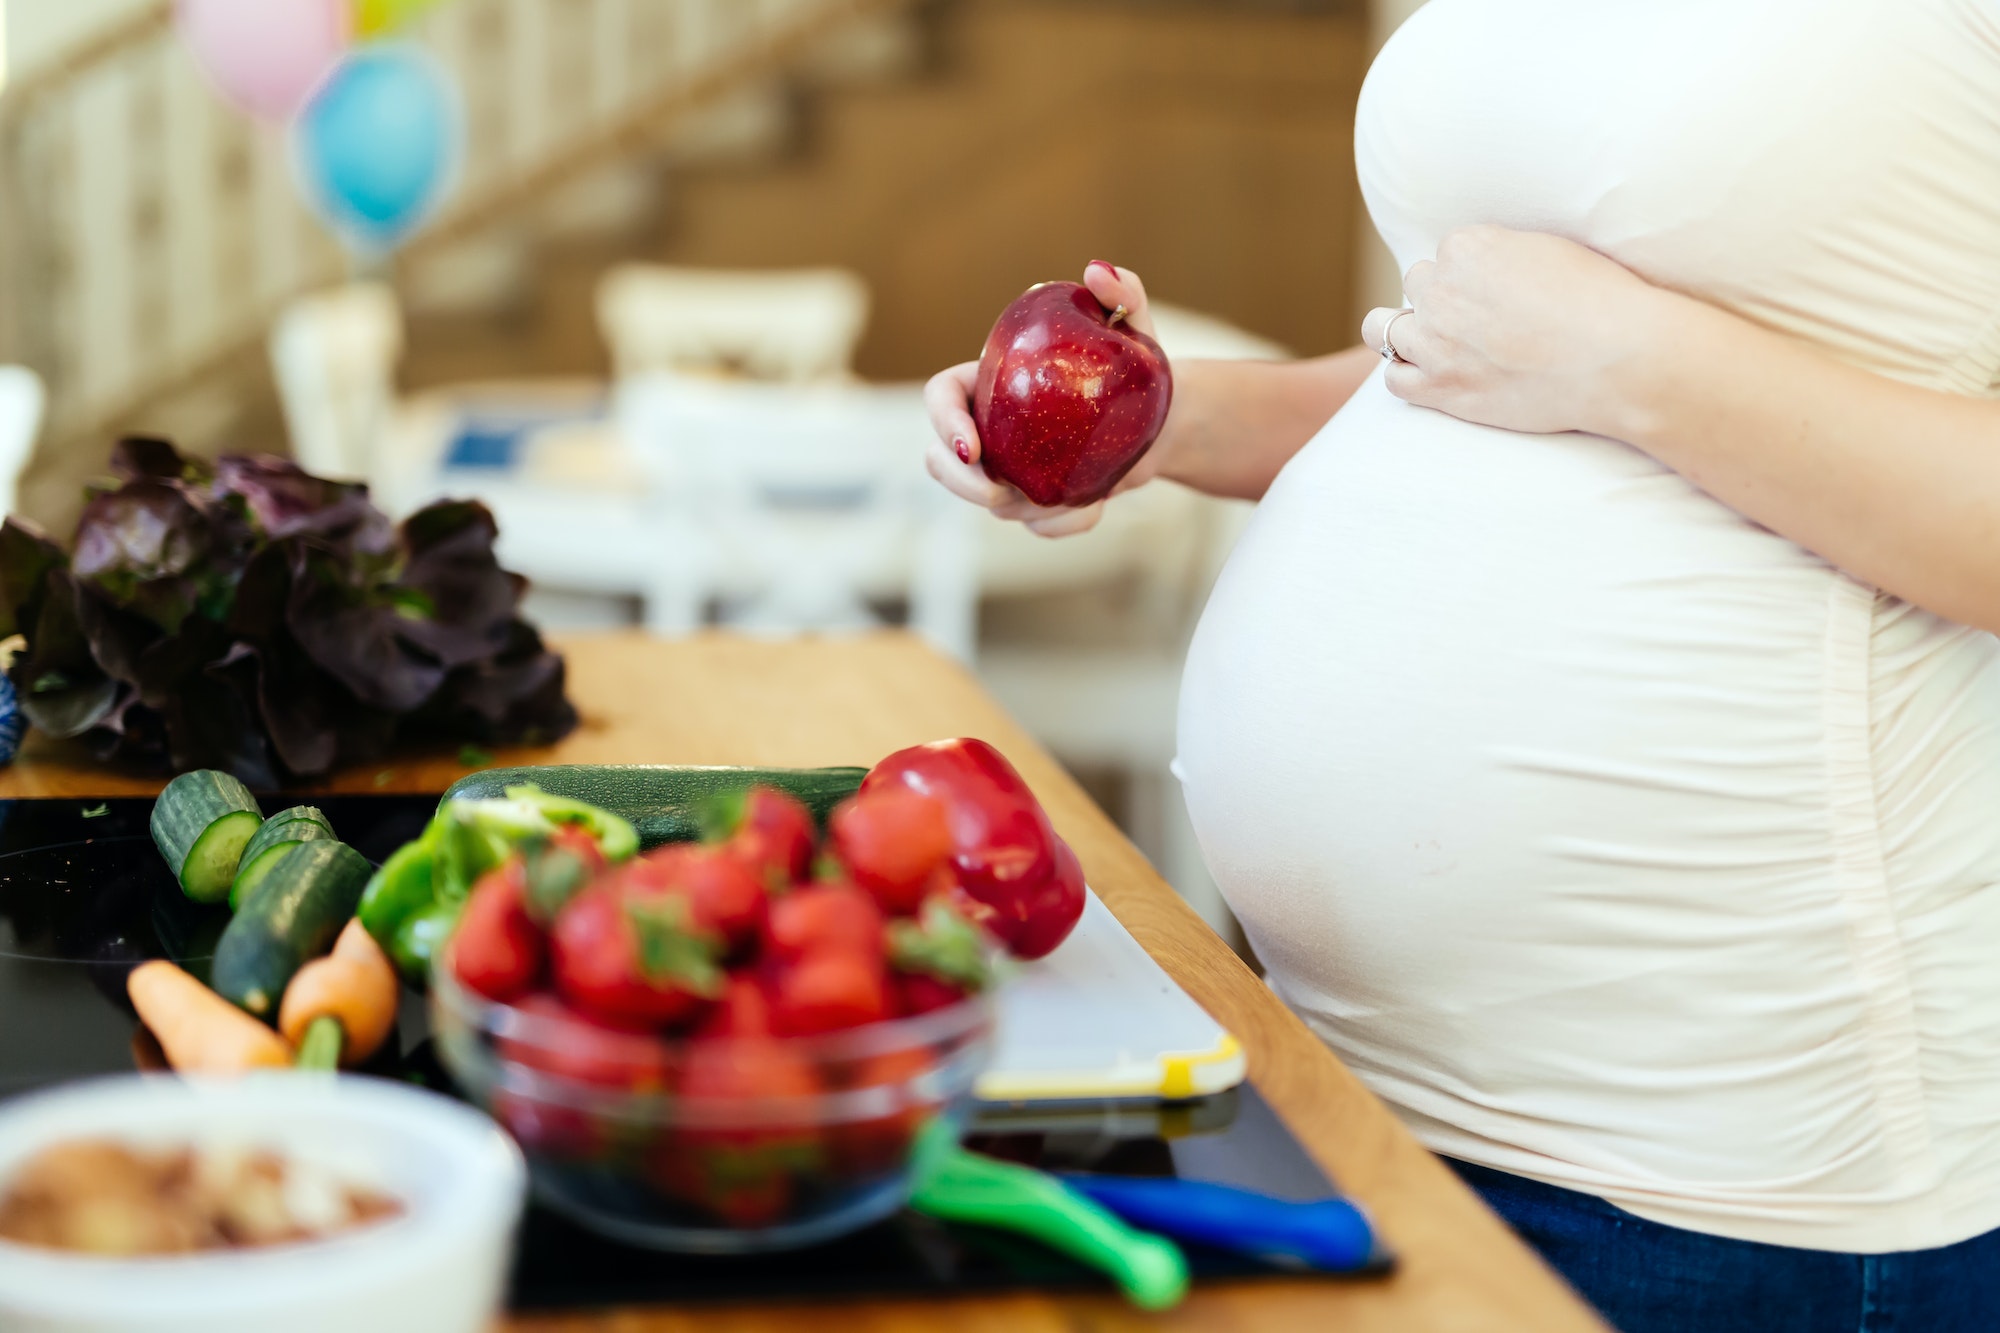 Pregnant woman healthy diet